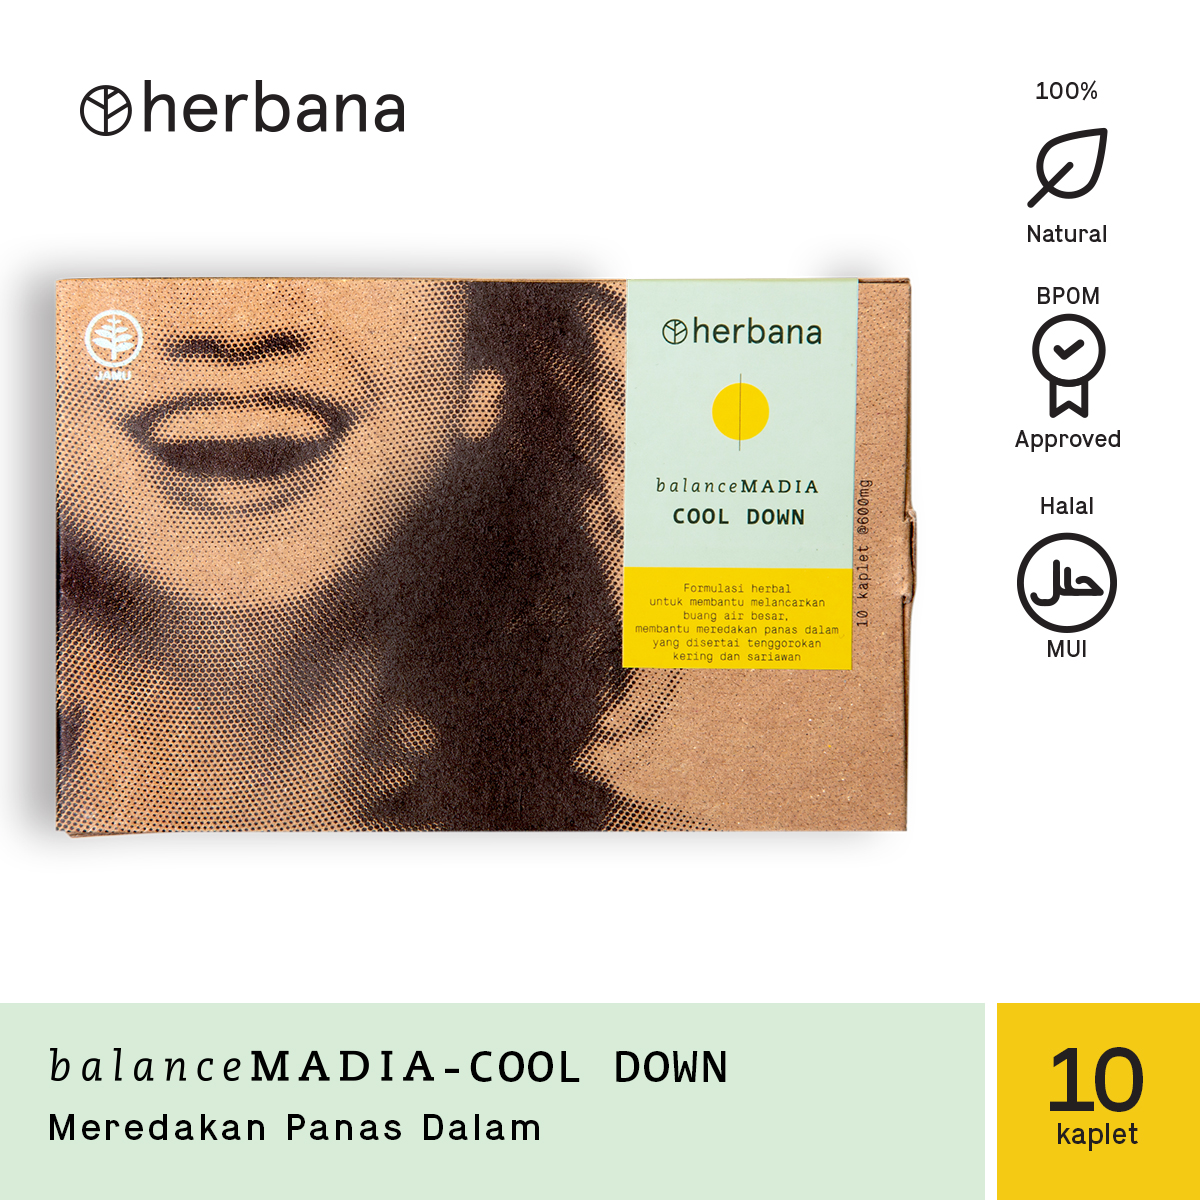 herbana-balance-madia-cool-down-10-caplets-84-1615972968.jpg